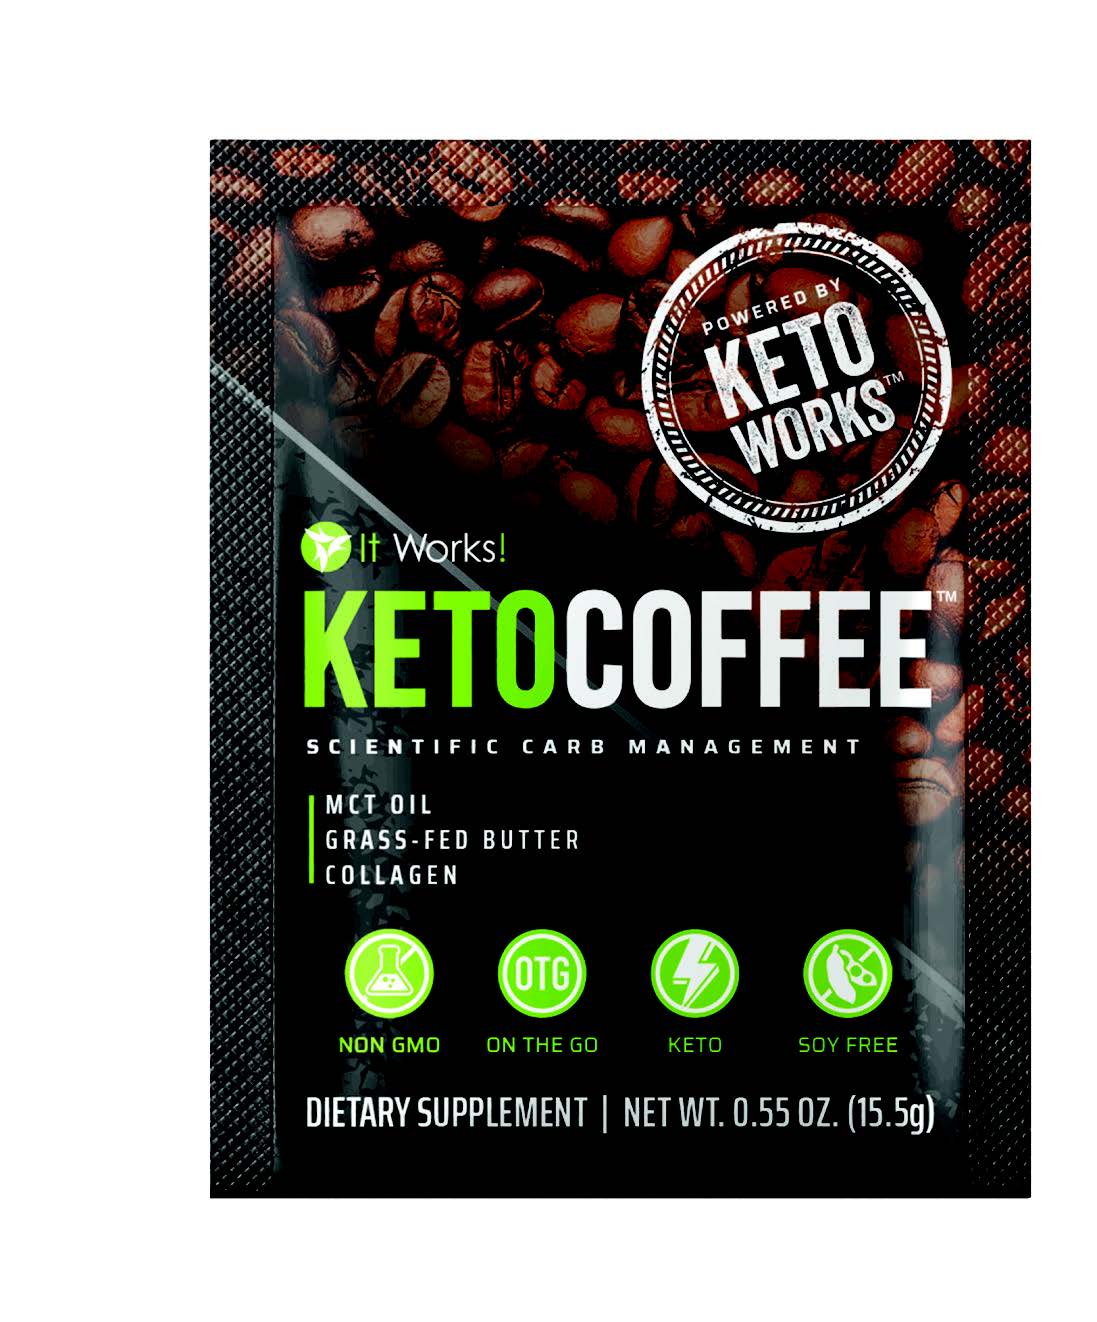 Keto coffee it works